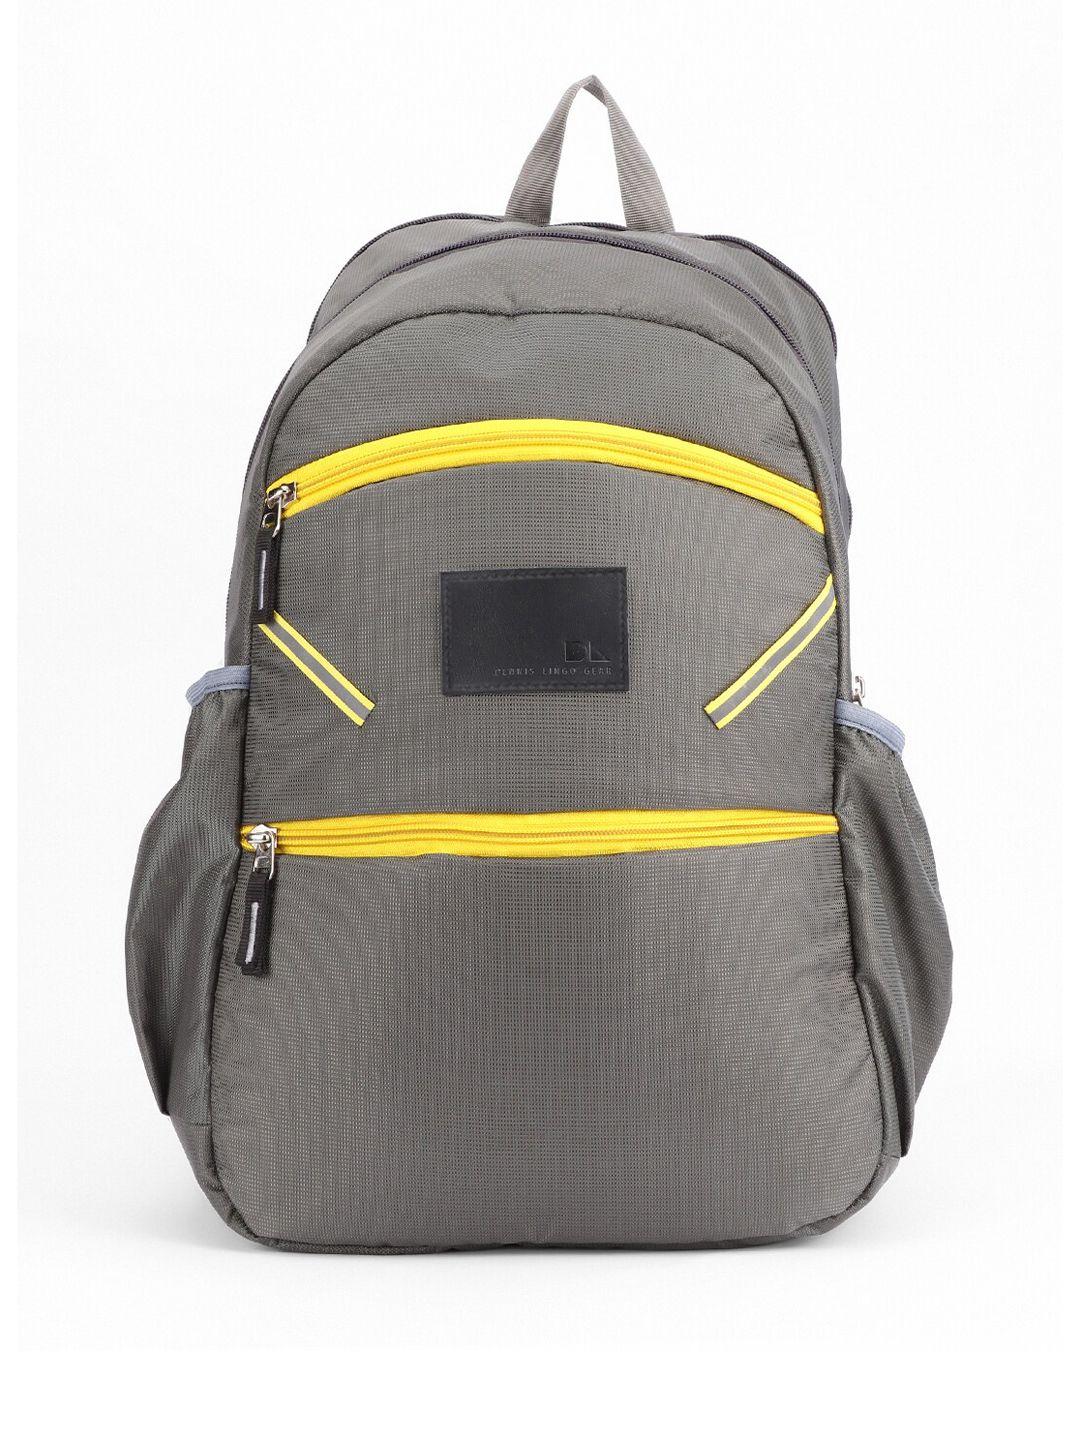 dennis lingo unisex colourblocked backpack